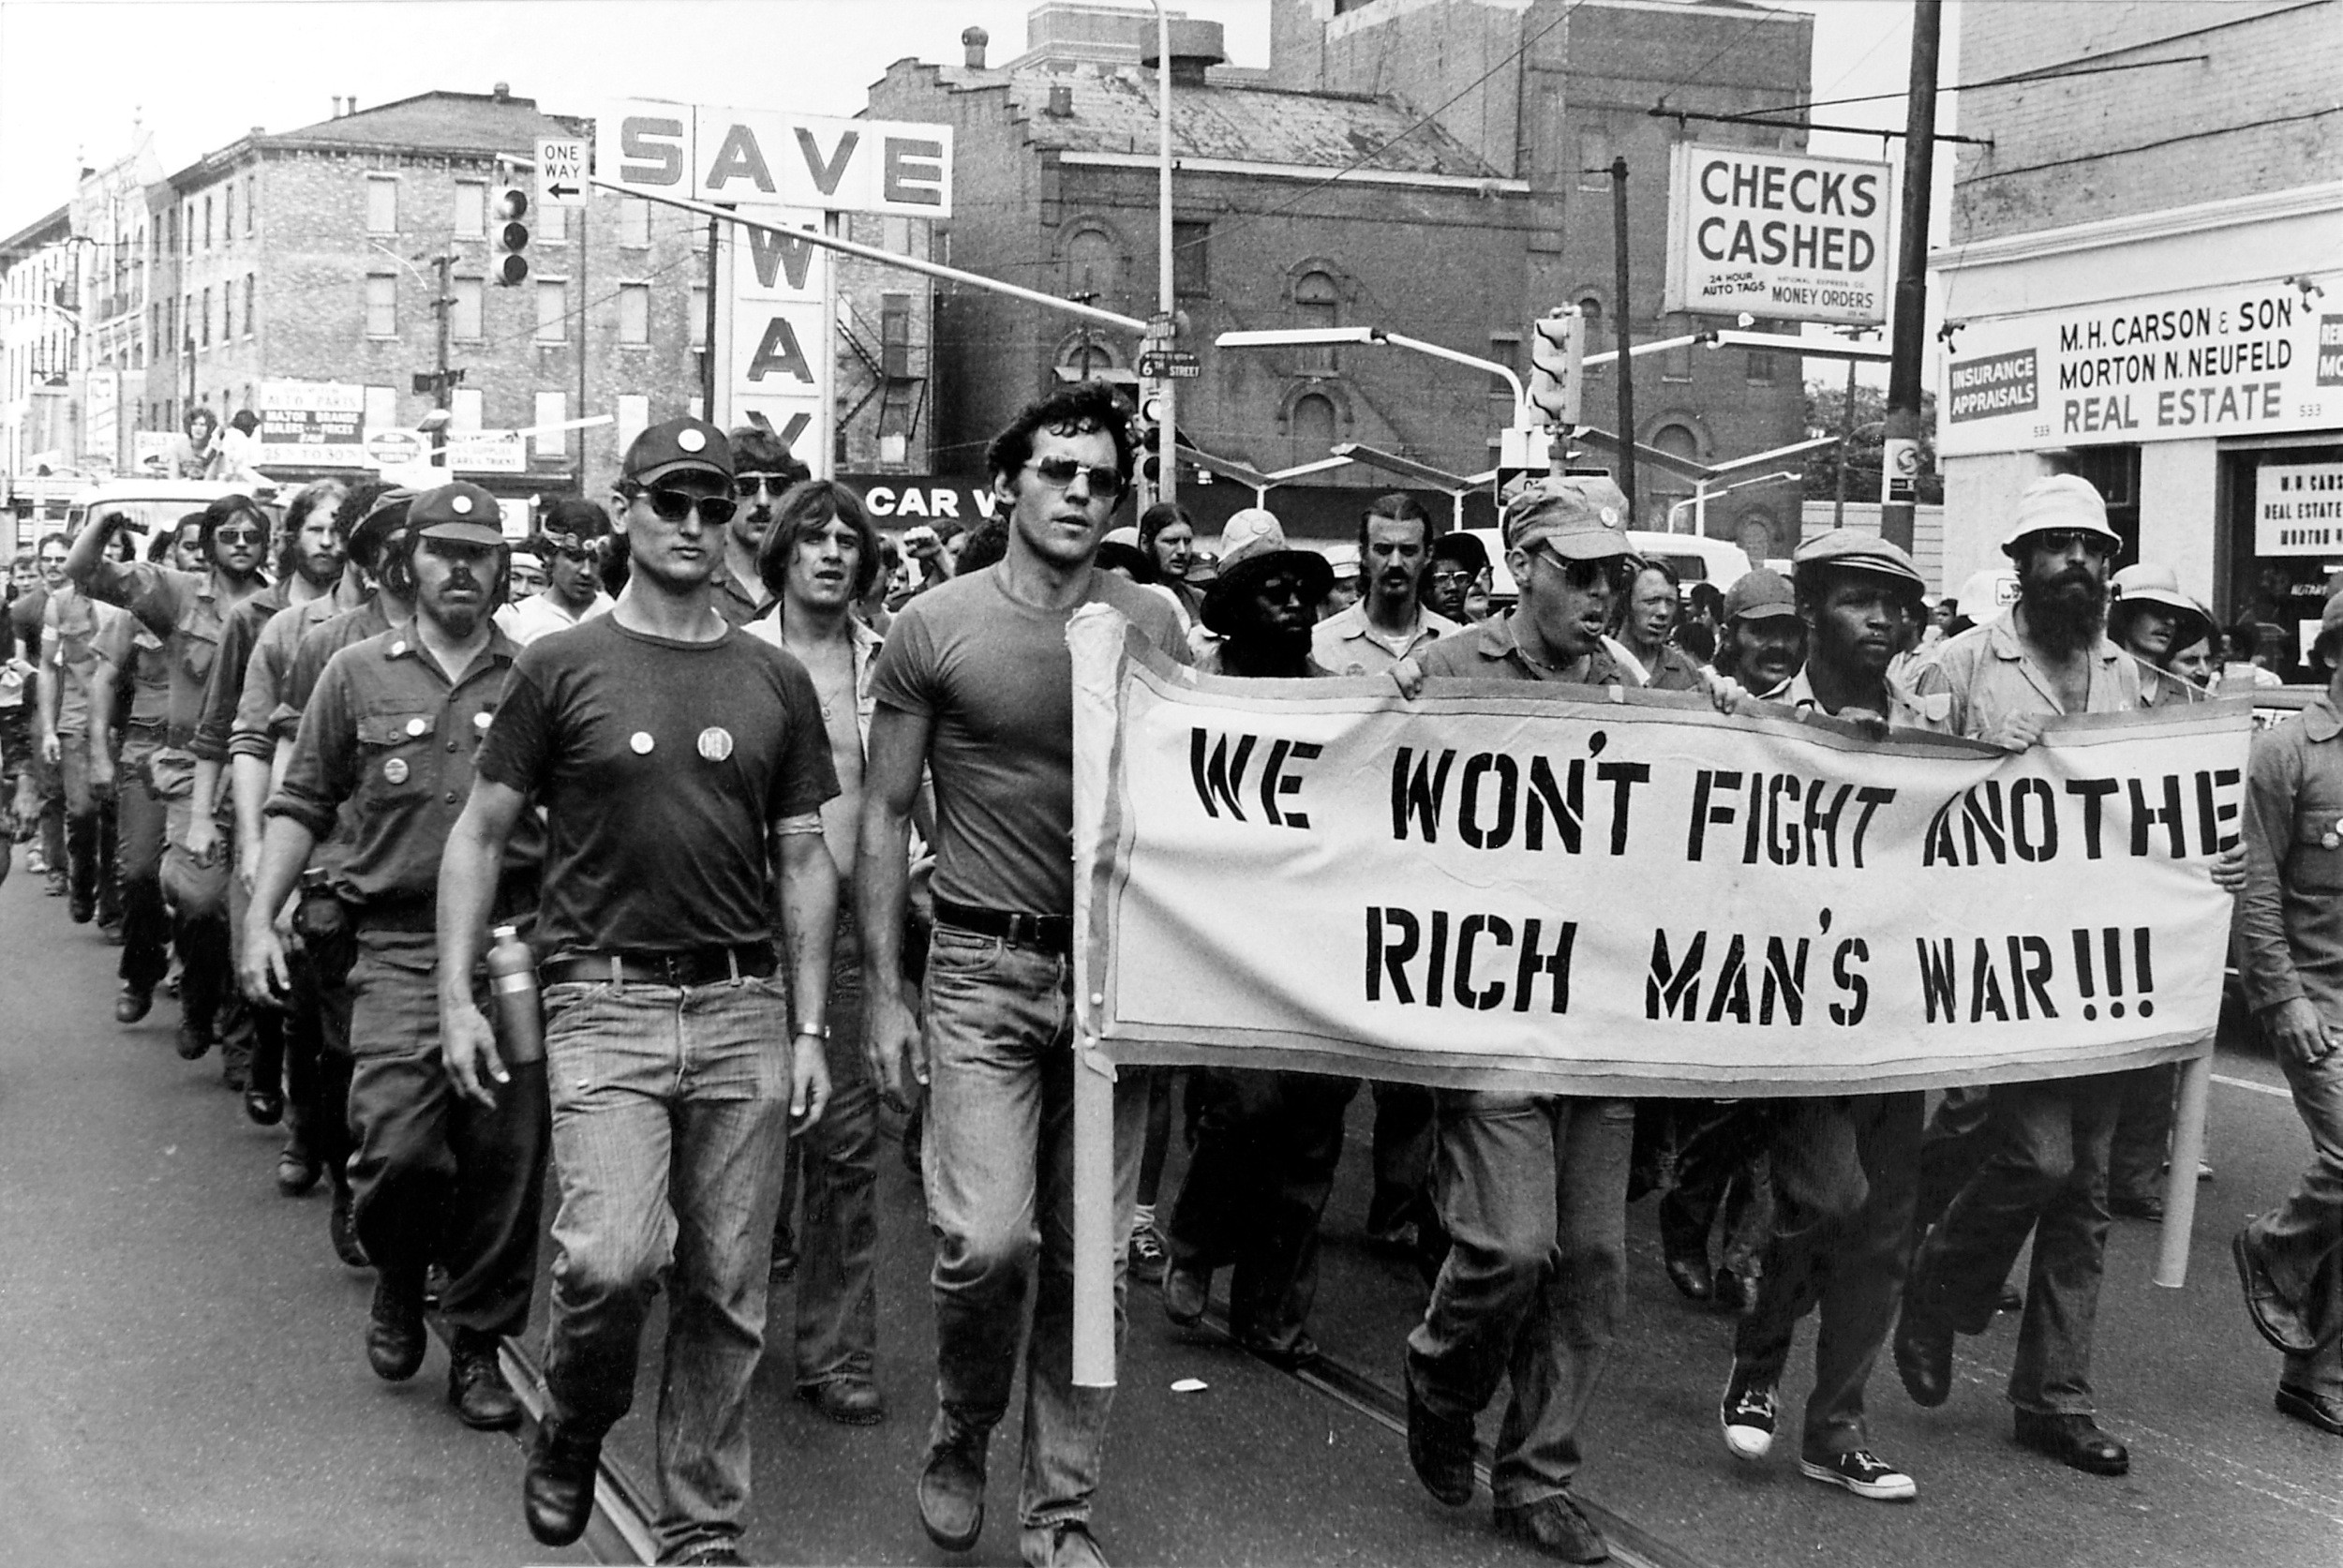 Vietnam Veterans Against the War, circa 1970